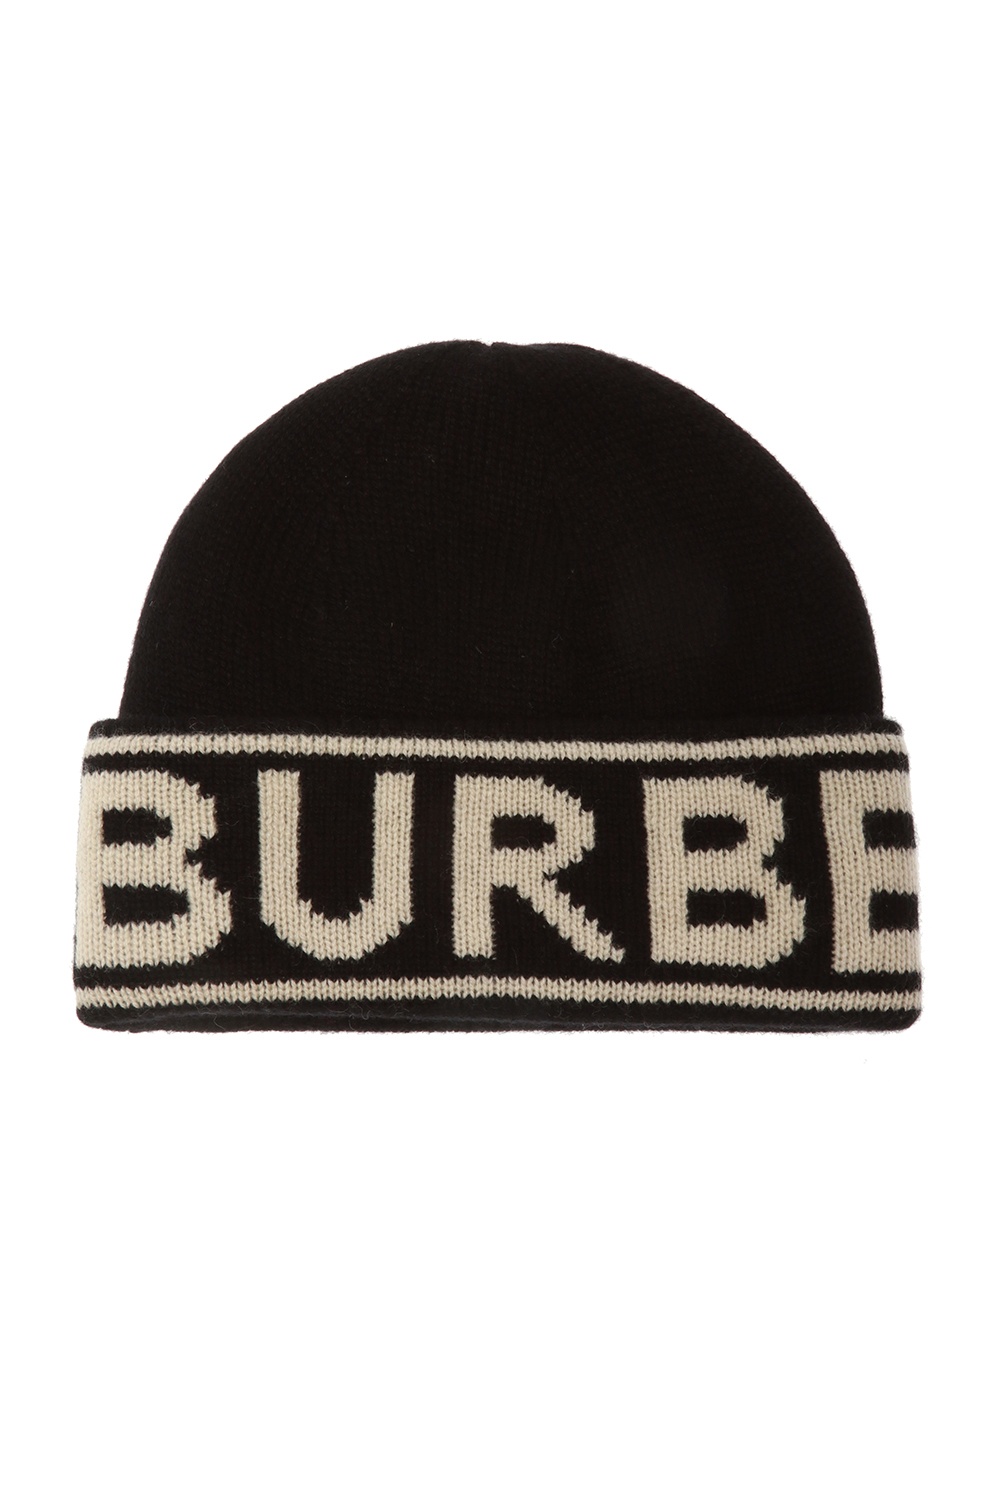 Burberry m brown caps